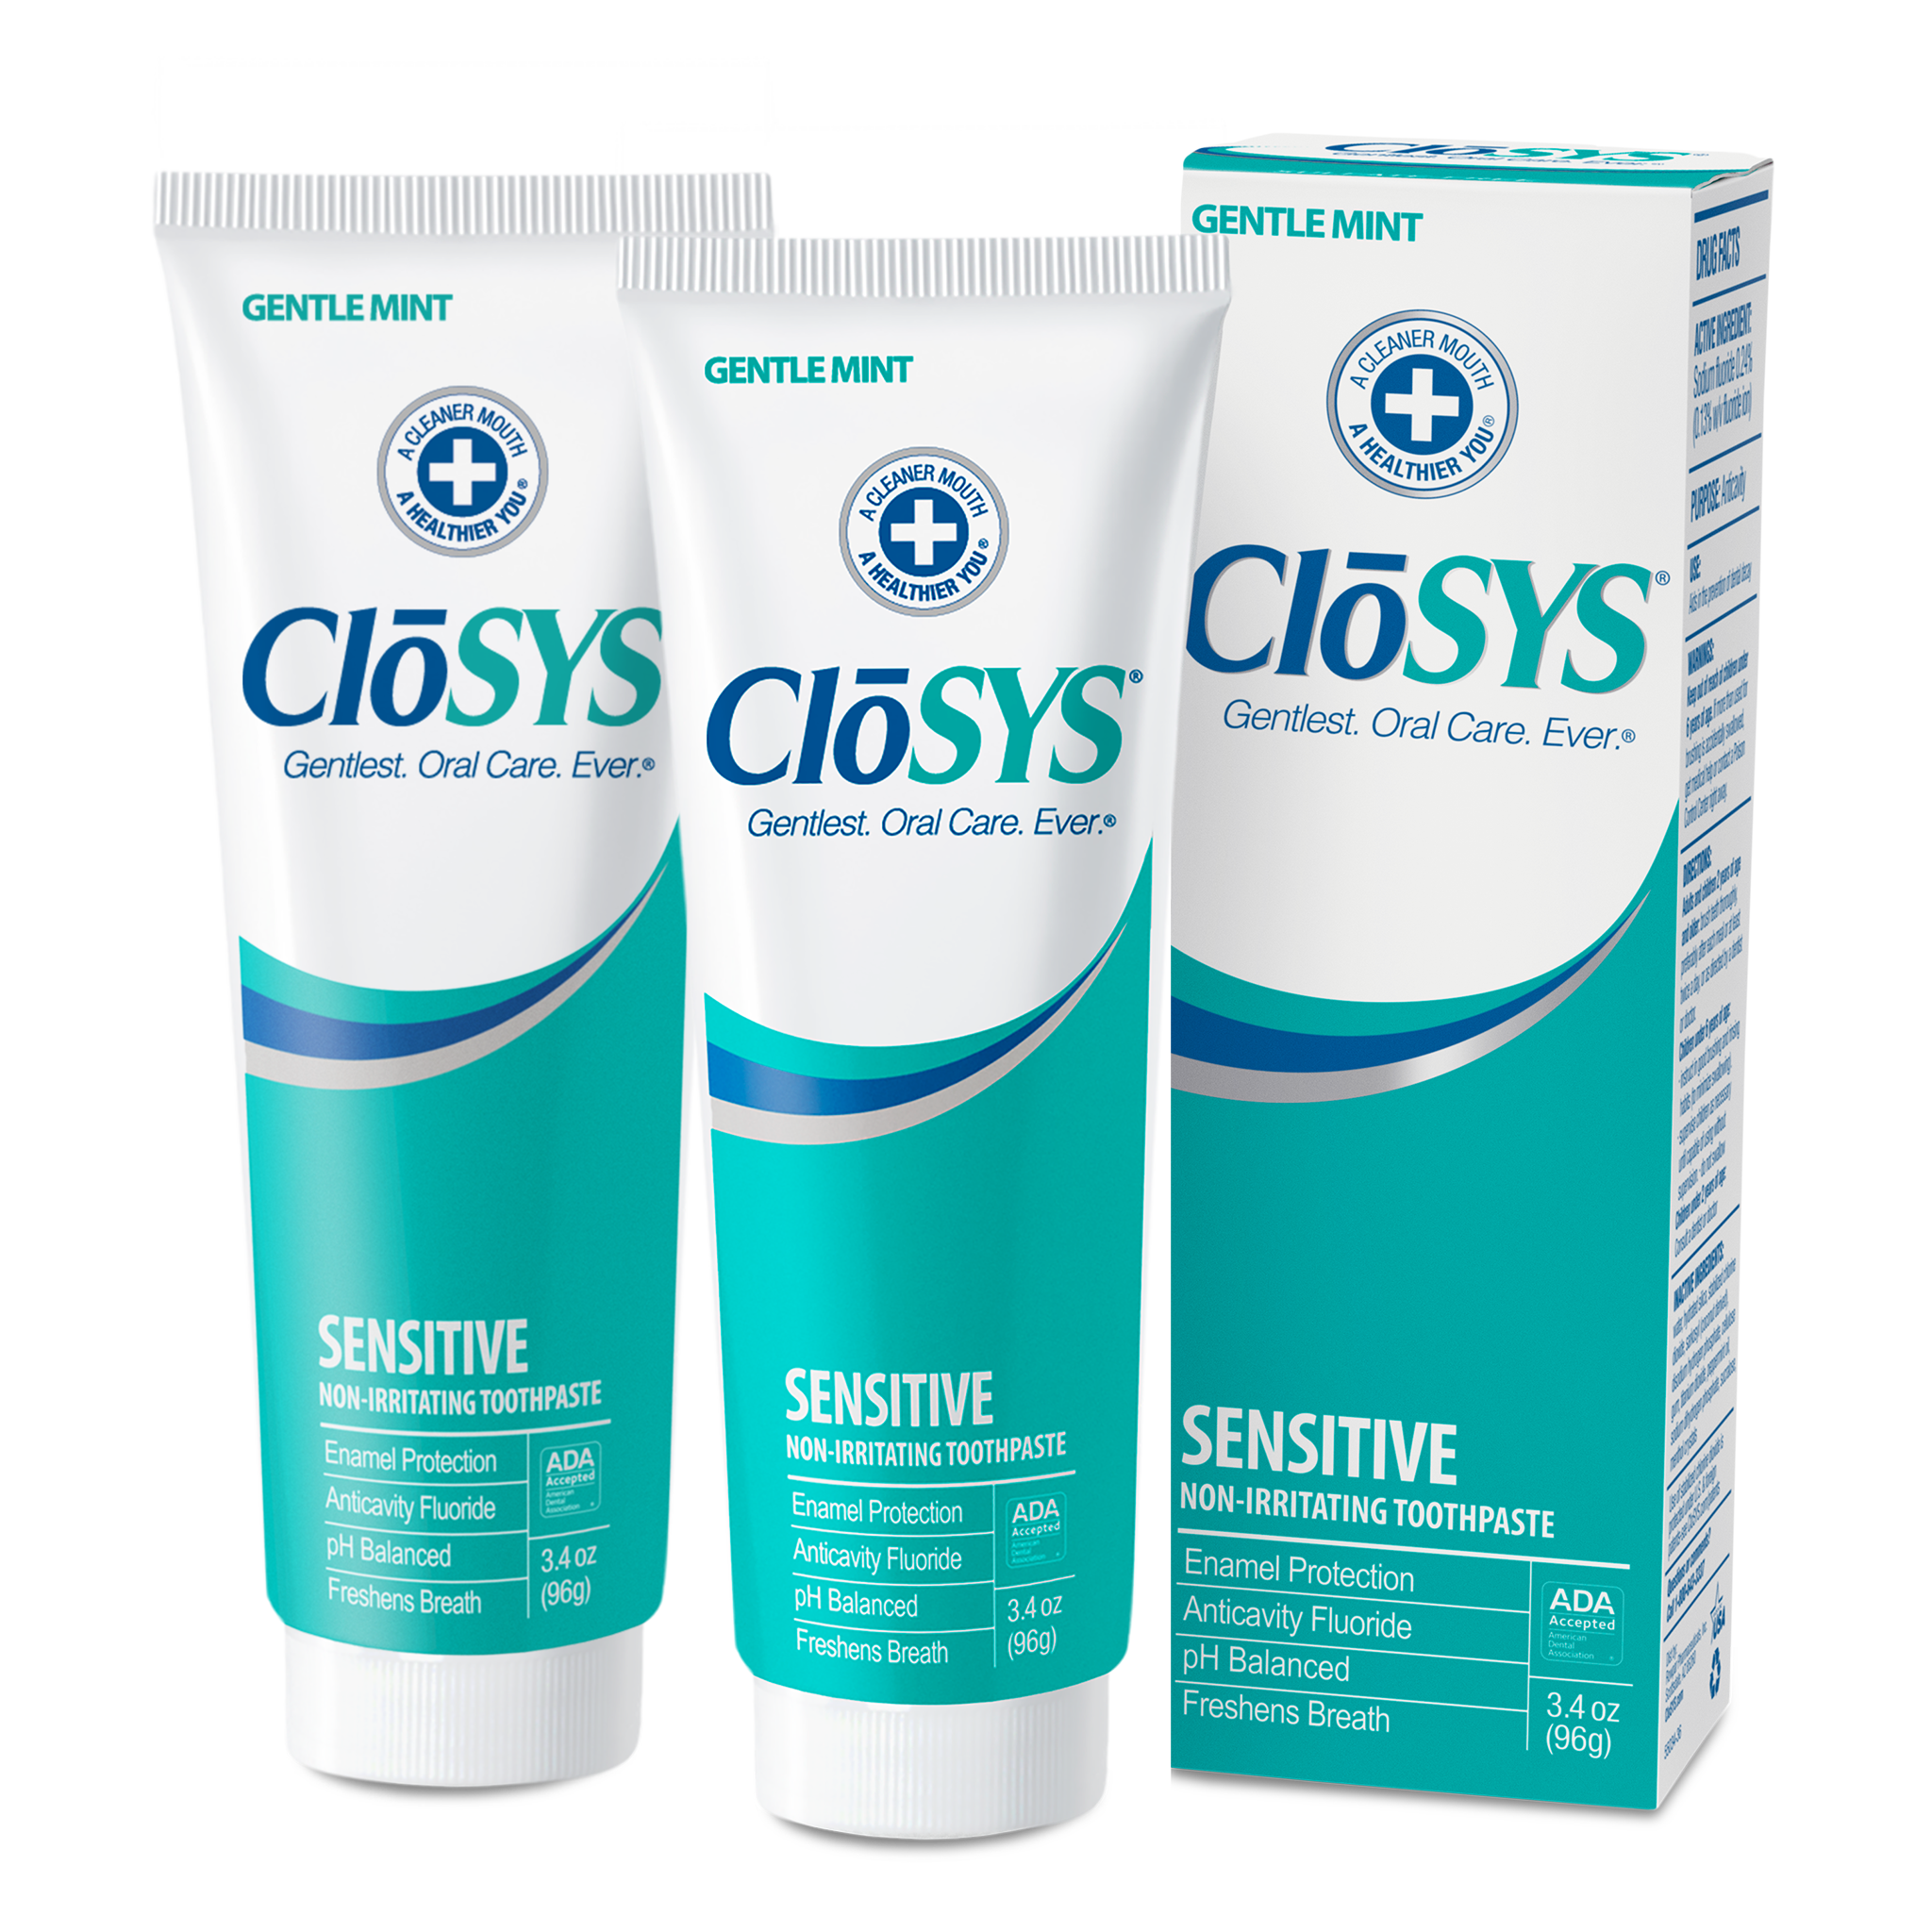 CloSYS Sensitive Toothpaste